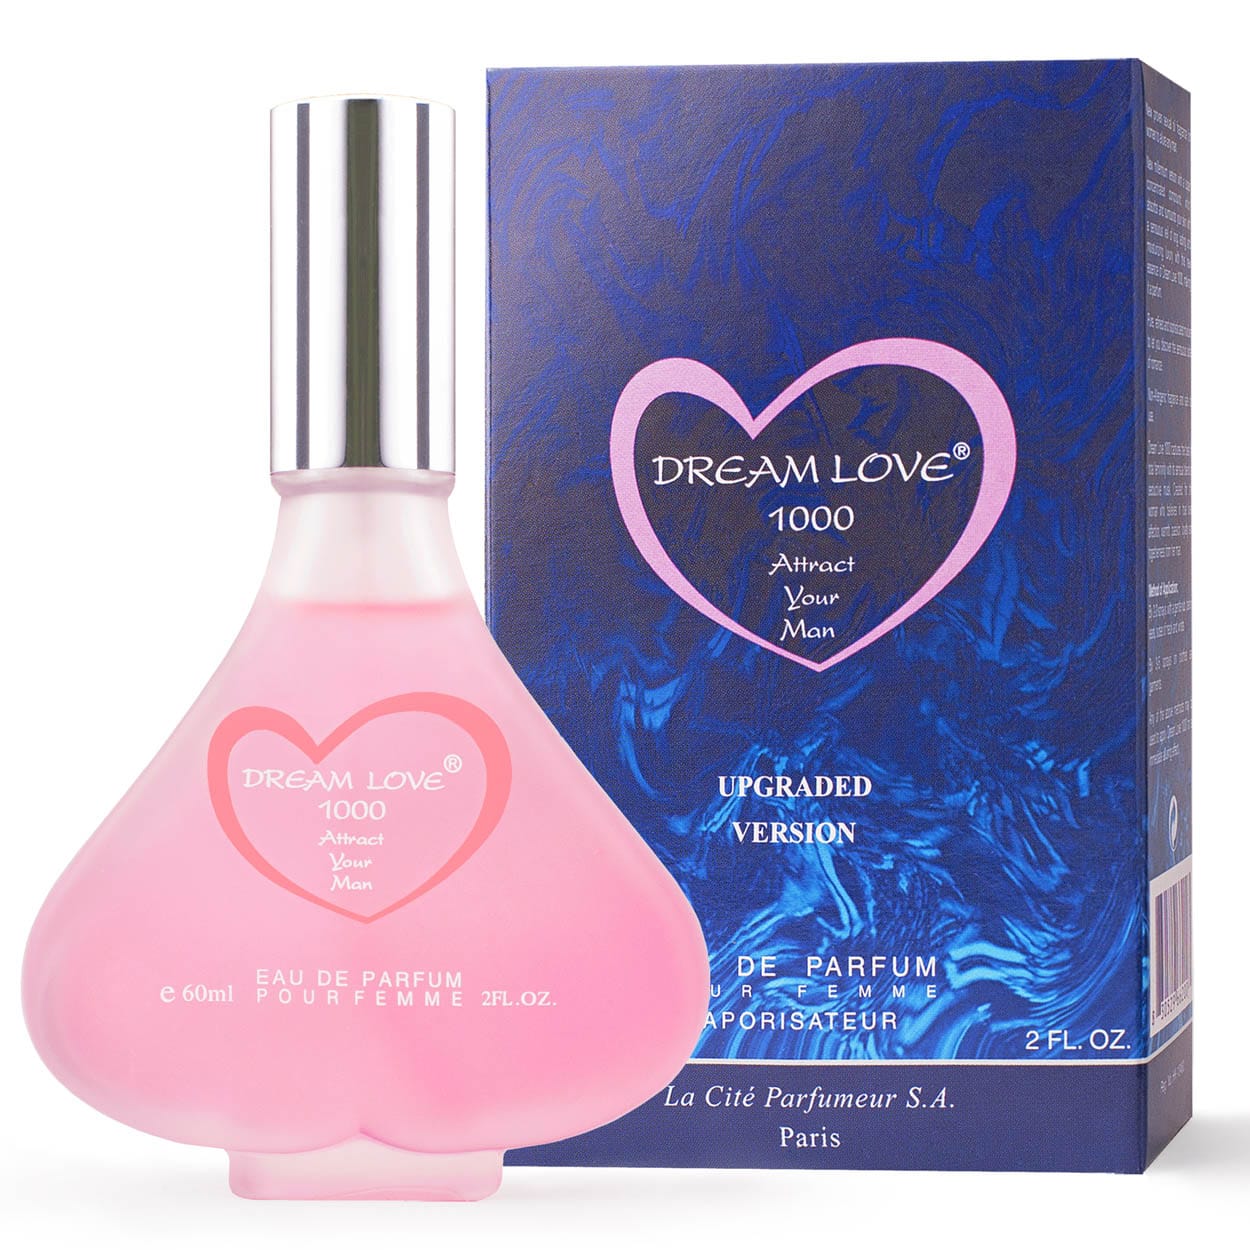 Perfume main image sample. Click to enlarge